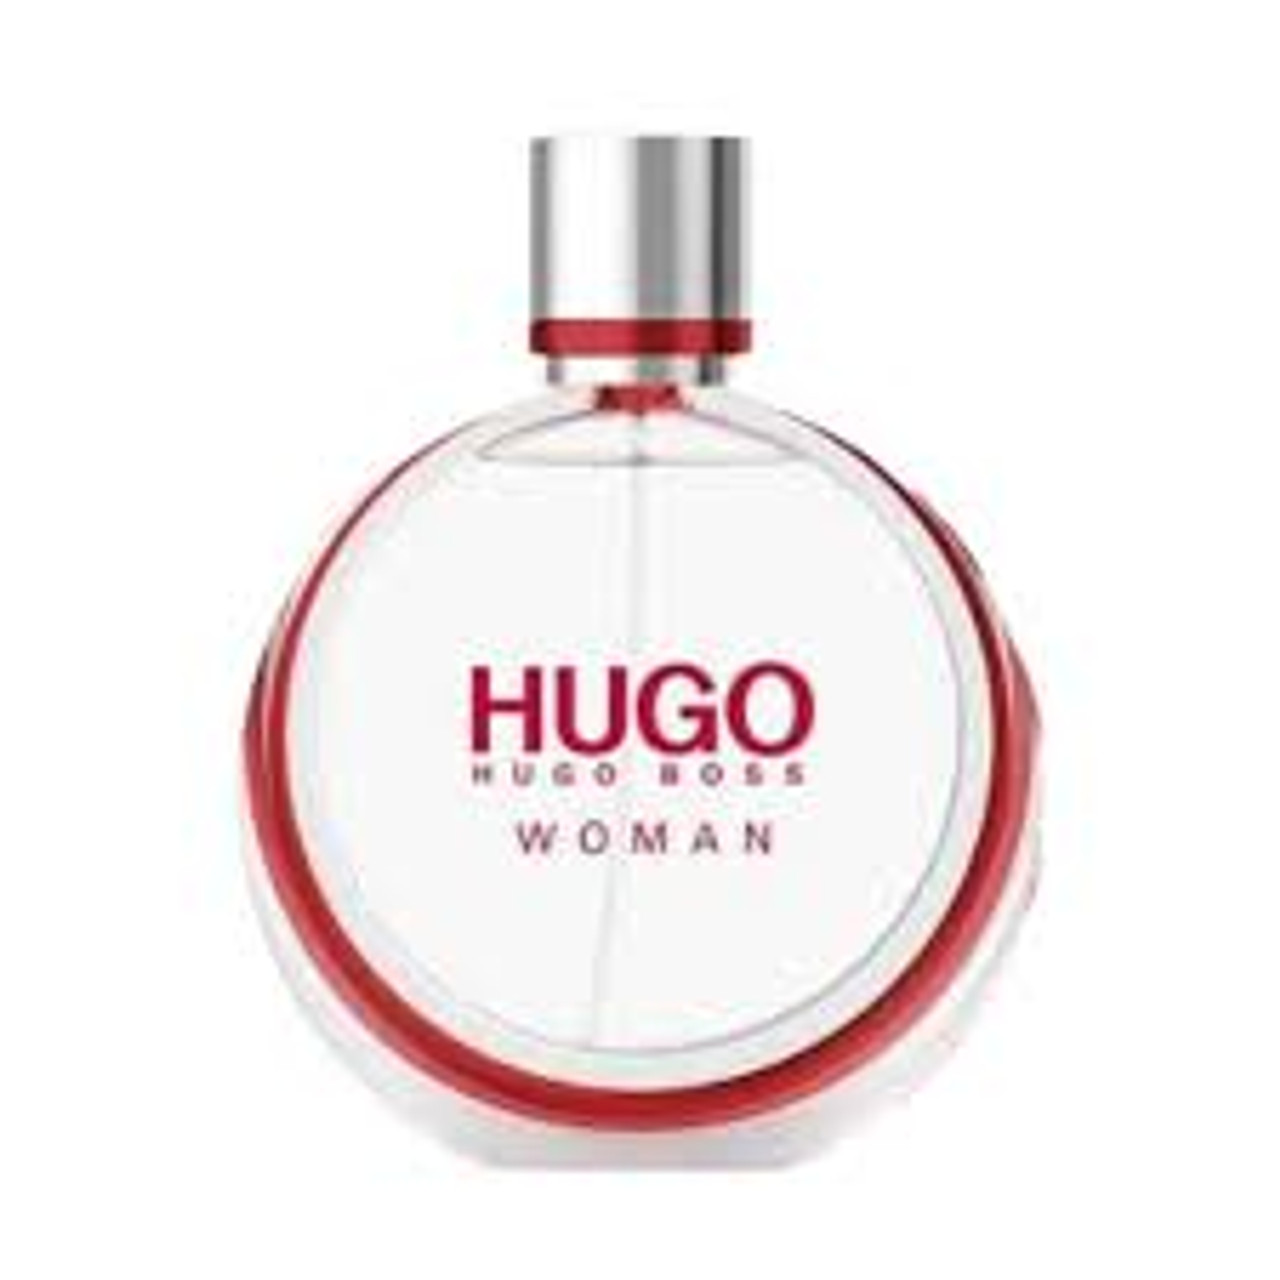 Hugo by Boss Eau Parfum Spray 1.6oz